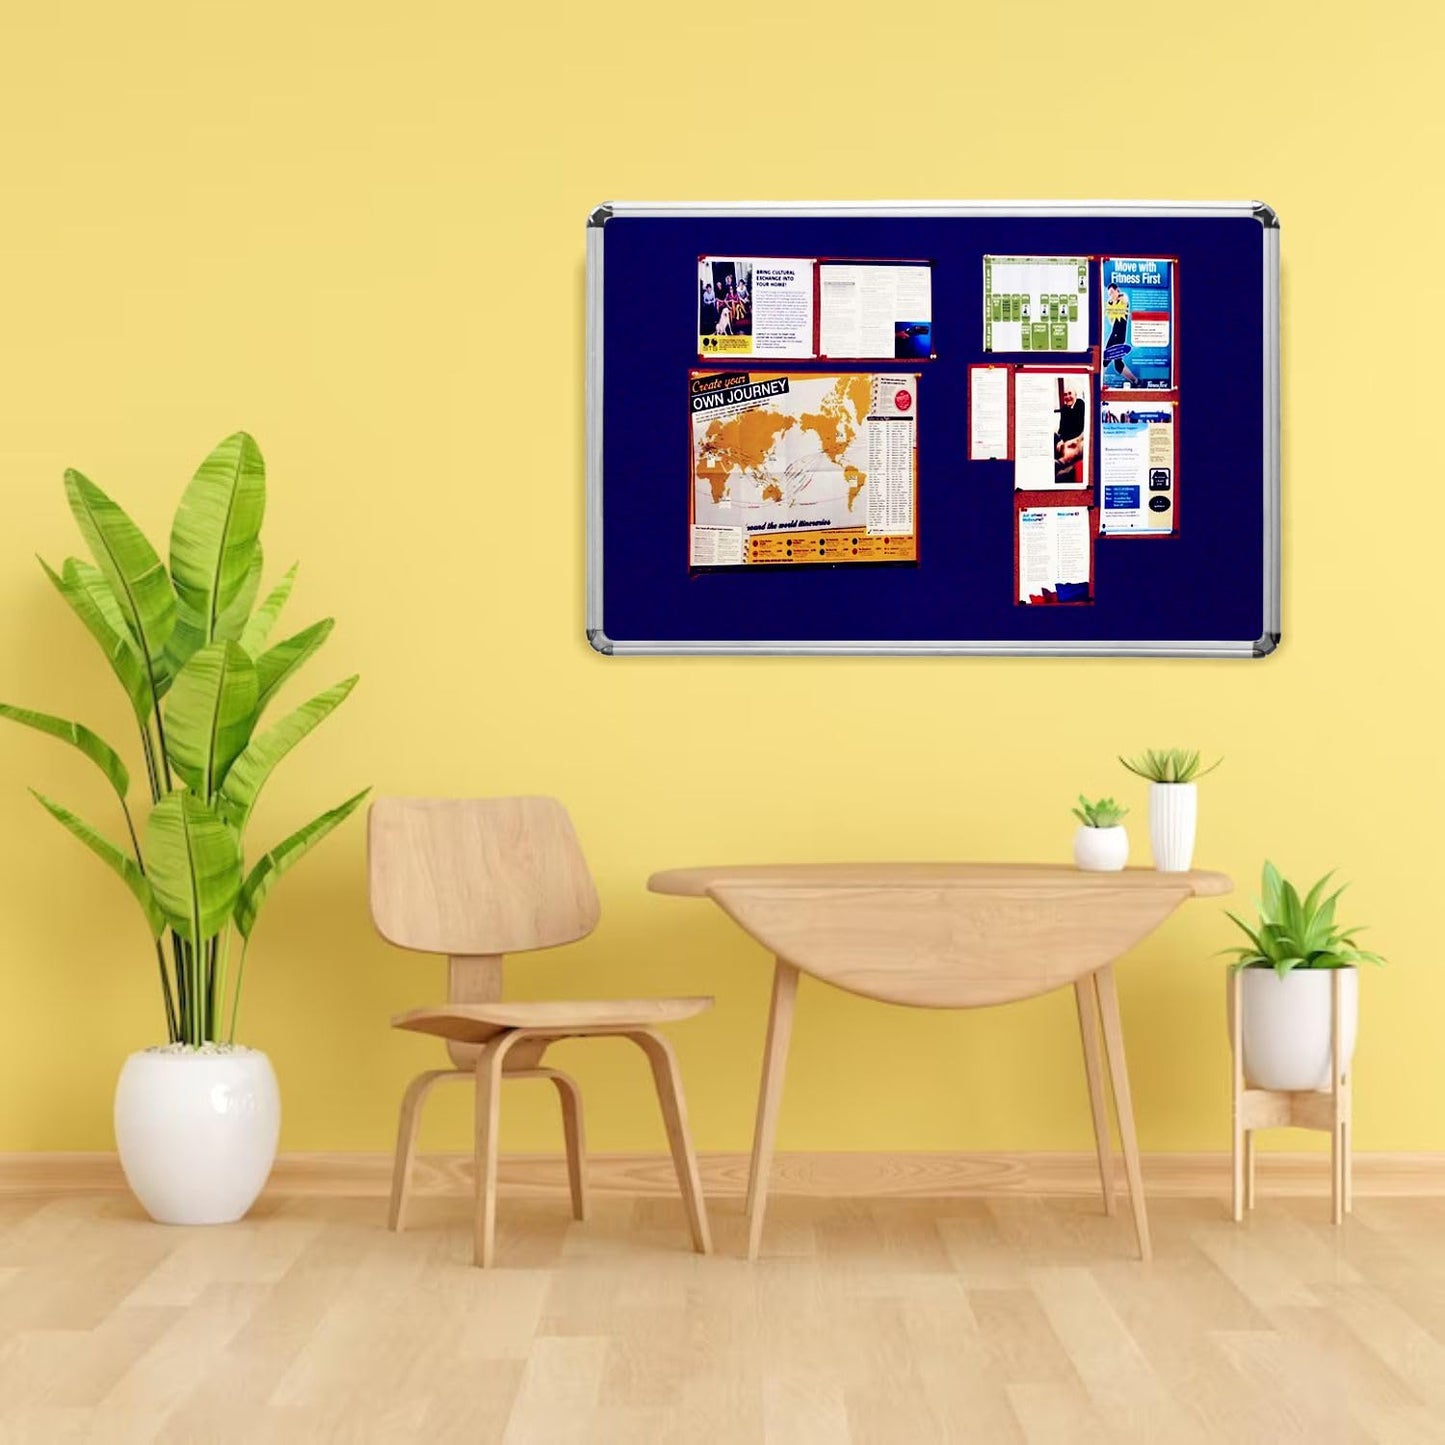 Digismart Noticeboard Nova Channel (Blue) for Office, Home & School Aluminum Frame (Pack of 1) (Non Magnetic)